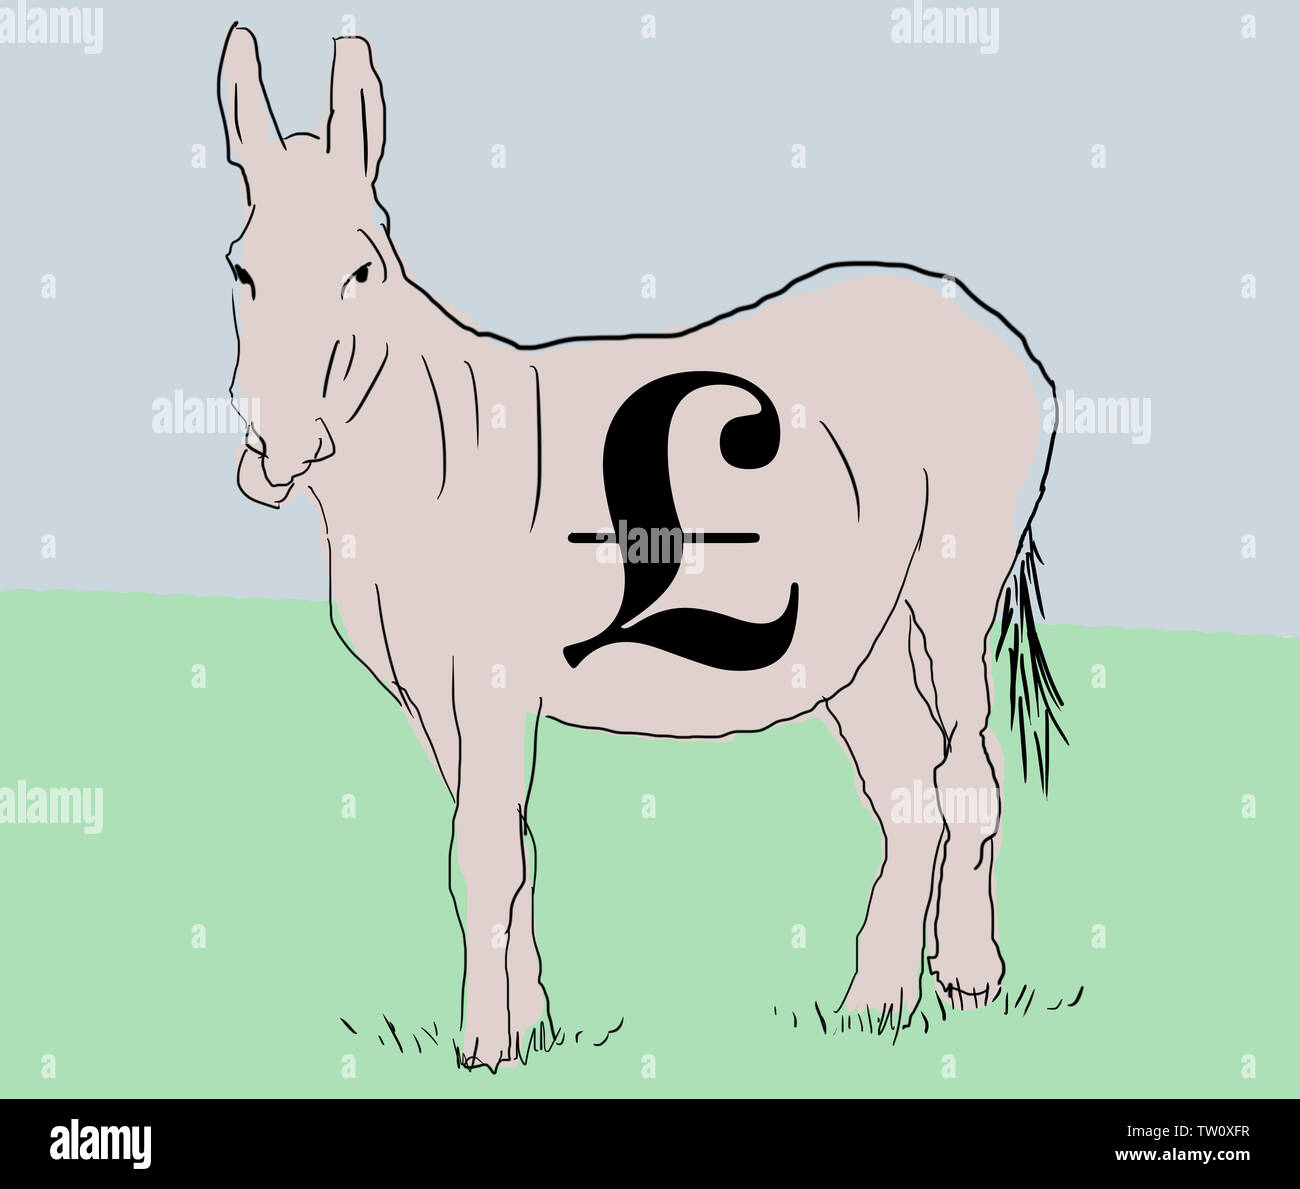 Money Mule illustration Stock Photo